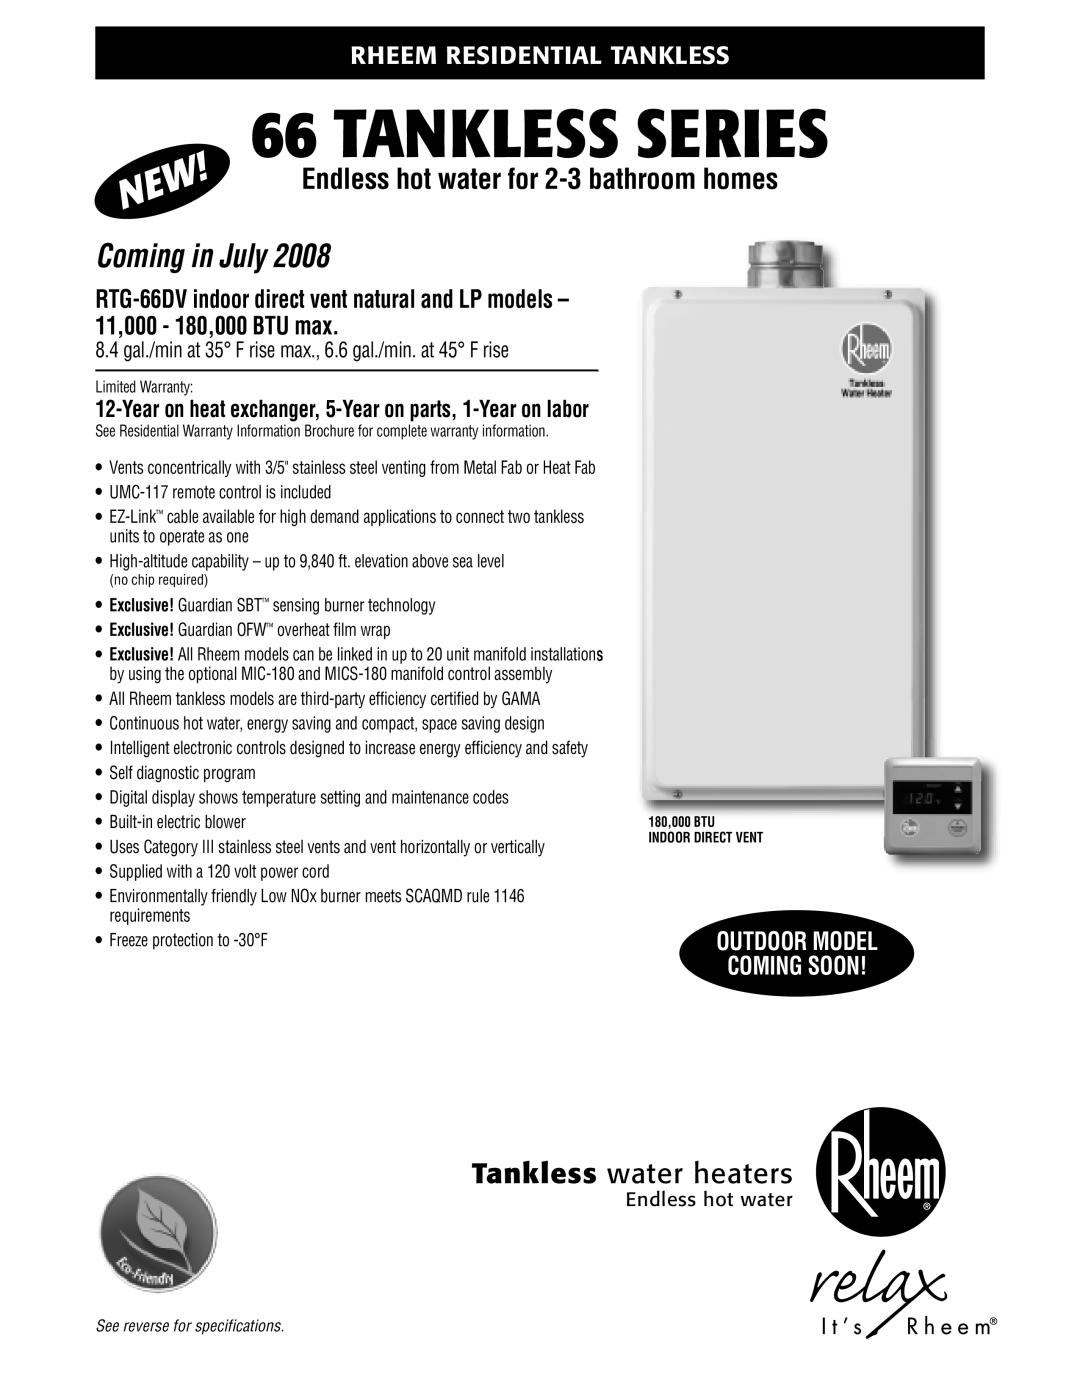 Rheem 11 warranty Tankless Series, Coming in July, Endless hot water for 2-3 bathroom homes, Tankless water heaters 